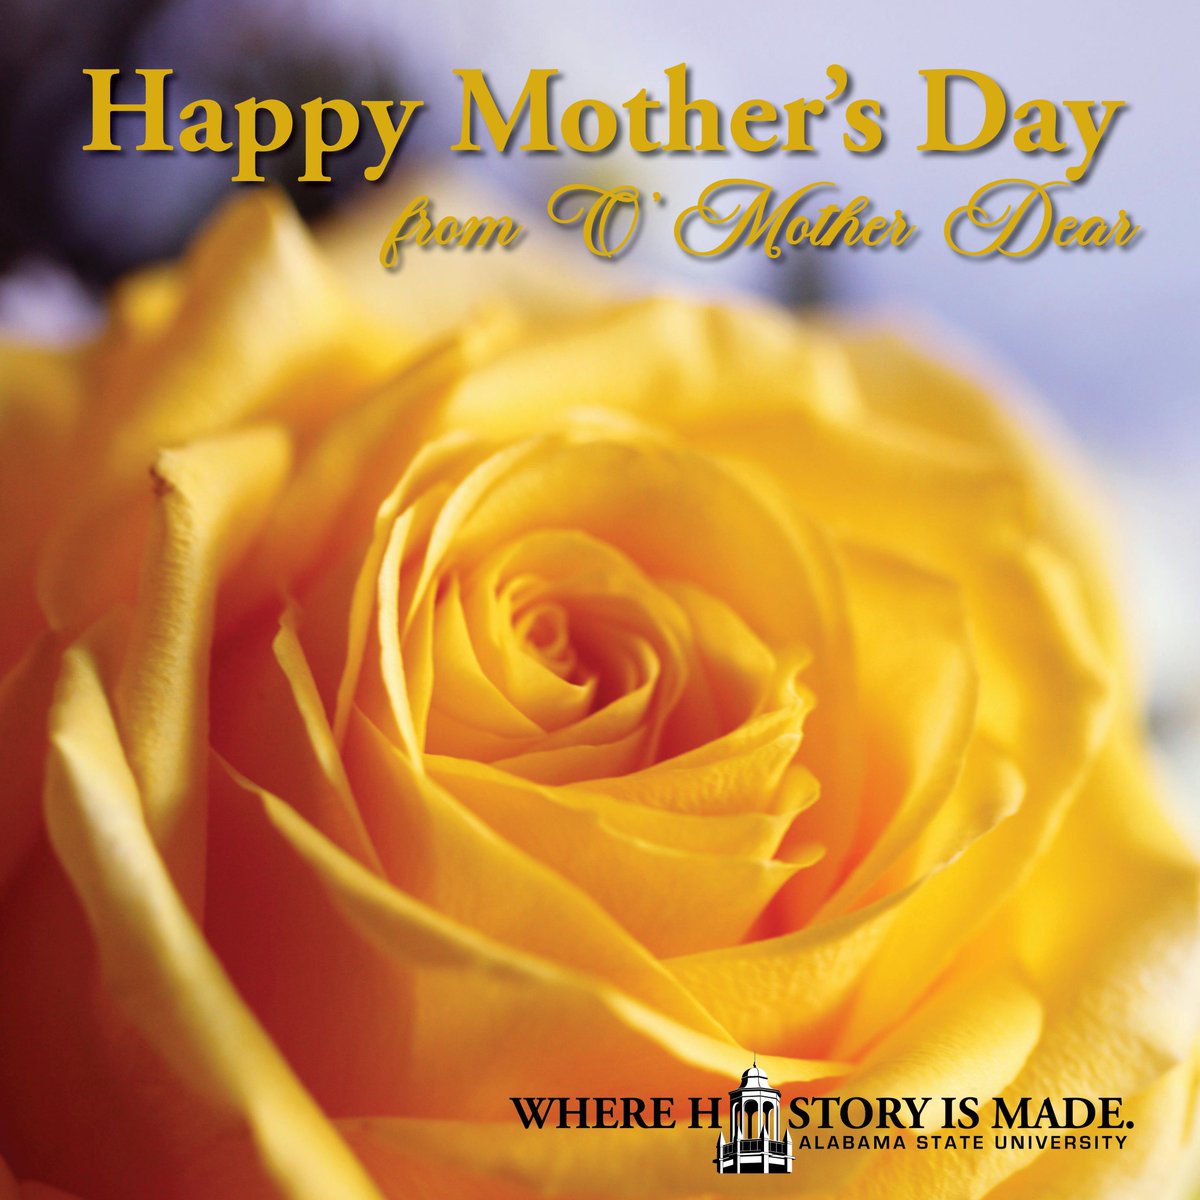 Happy Mother's Day from Alabama State University #MyASU #Bamastate #mothersday #WhereHistoryisMade #OMotherDear